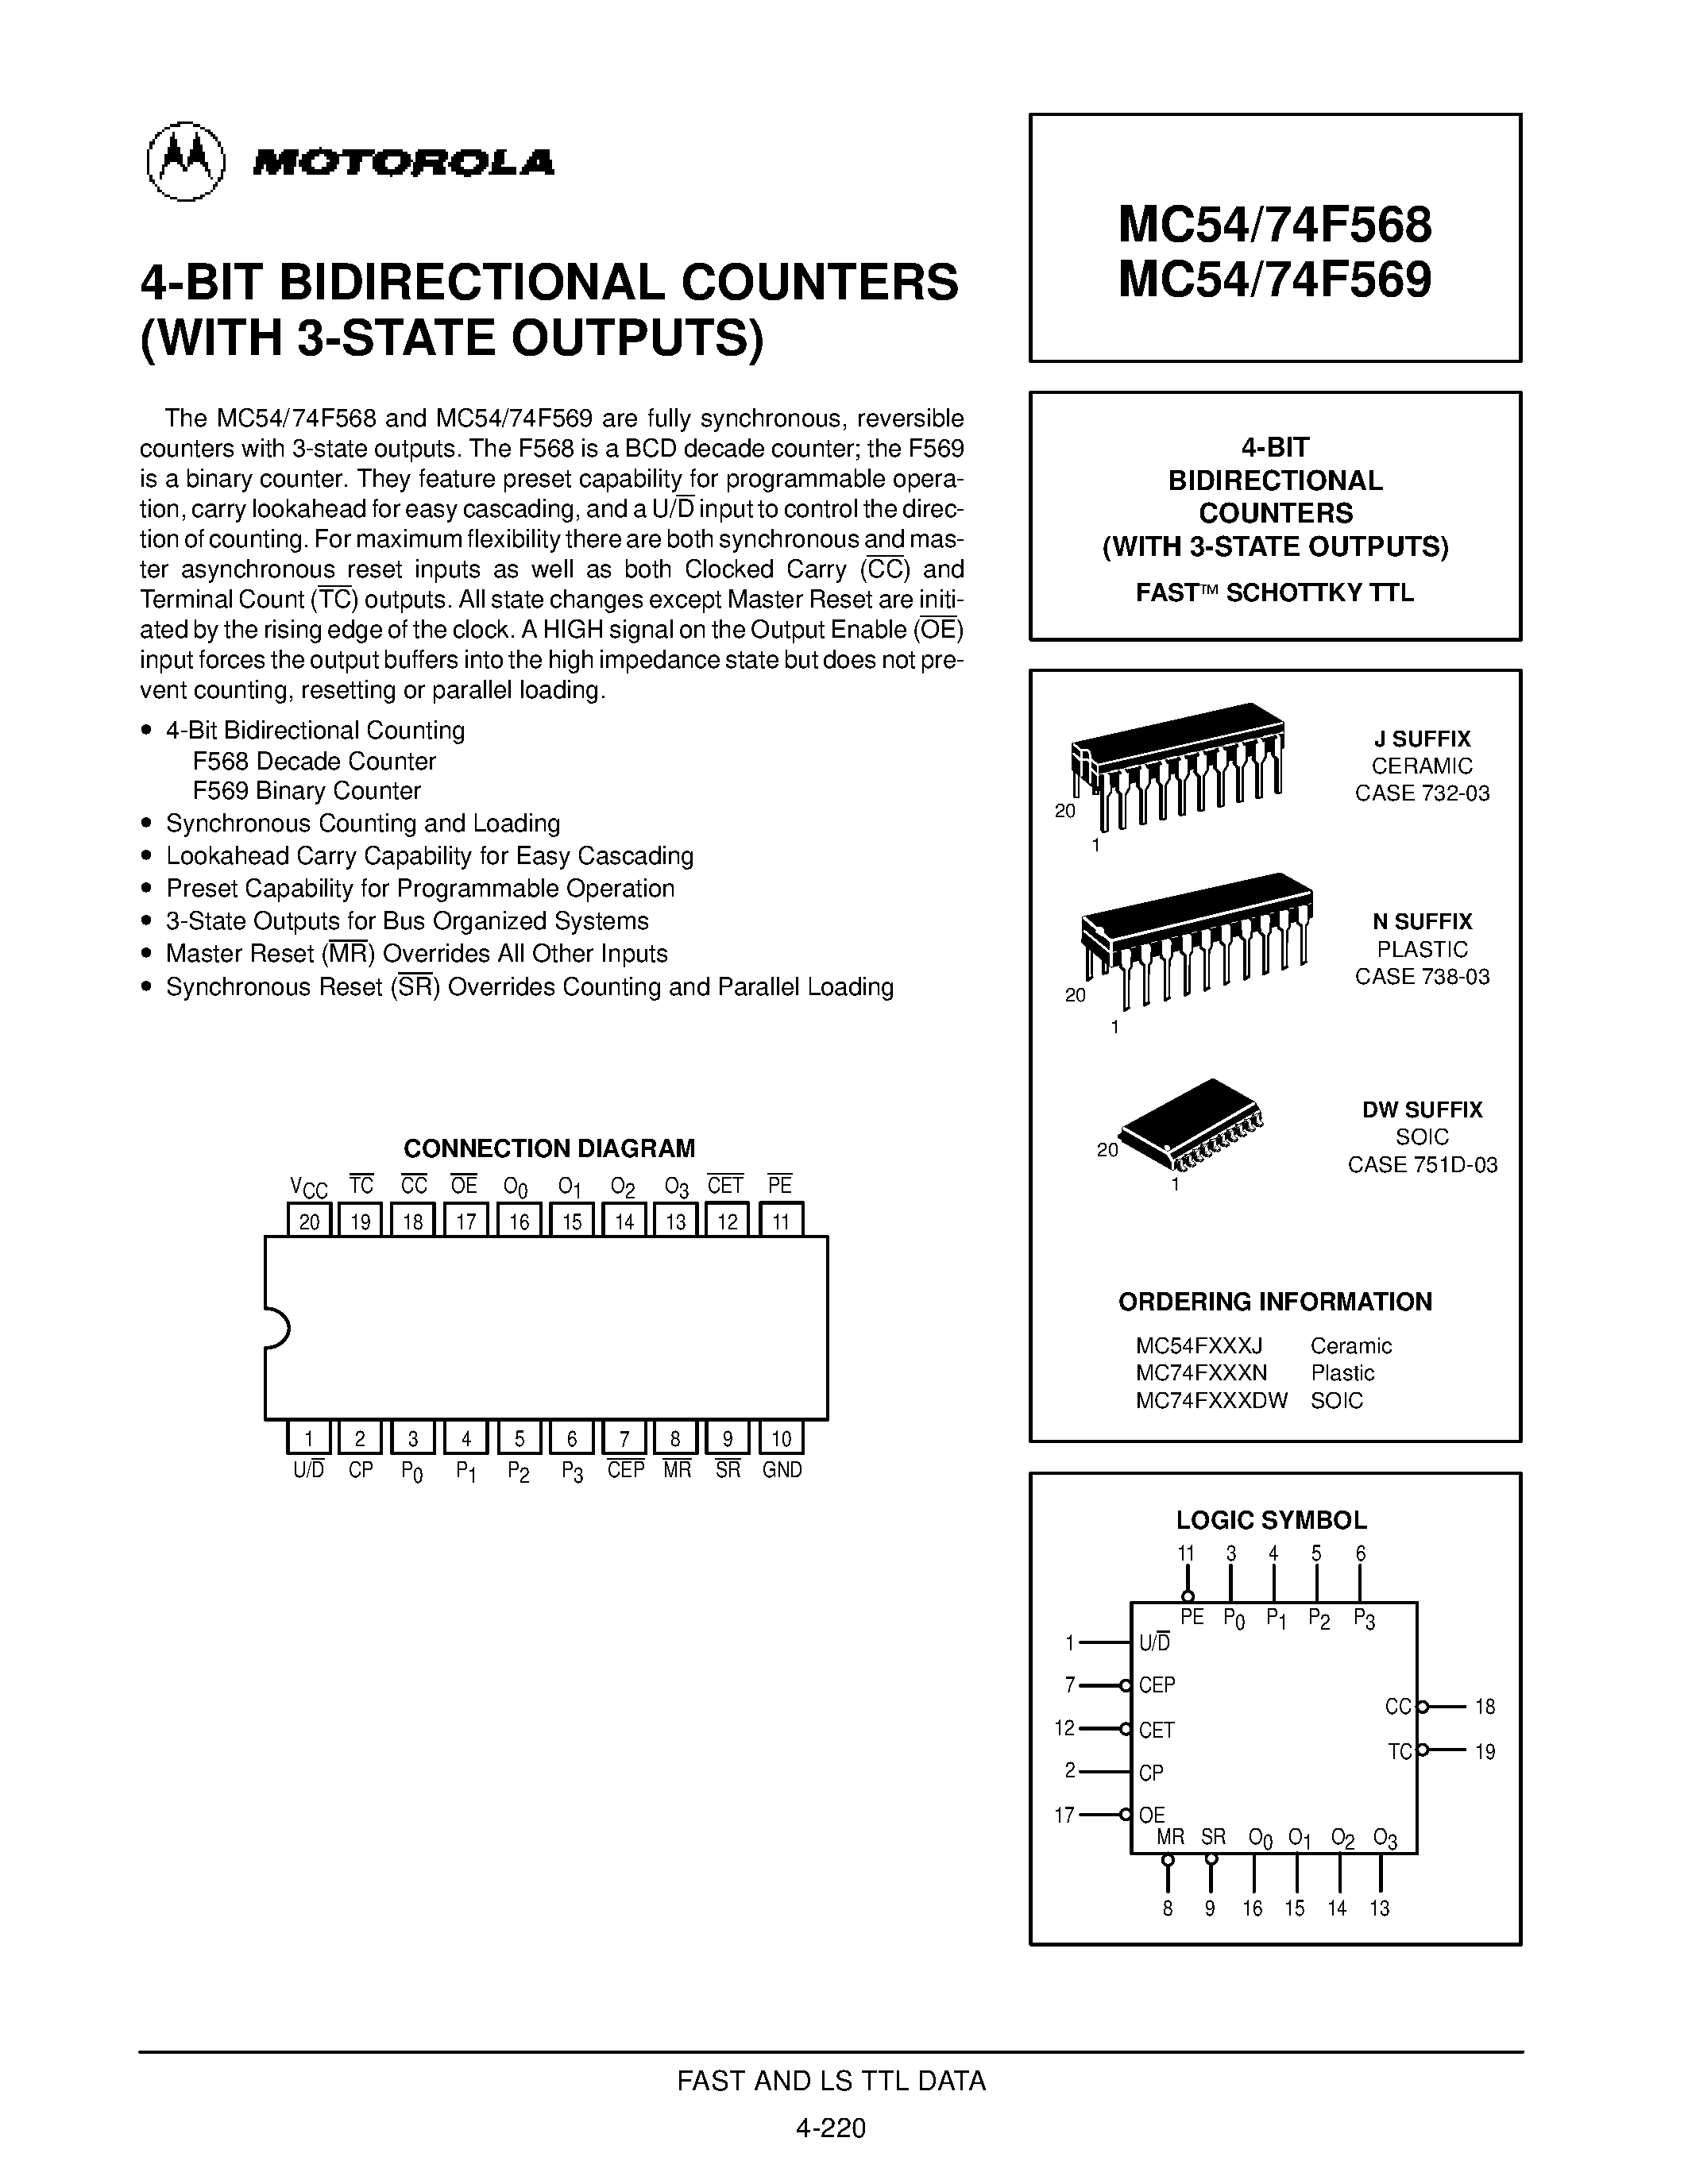 Datasheet MC74F568 - (MC74F568 / MC74F569) 4-BIT BIDIRECTIONAL COUNTERS(WITH 3-STATE OUTPUTS) page 1